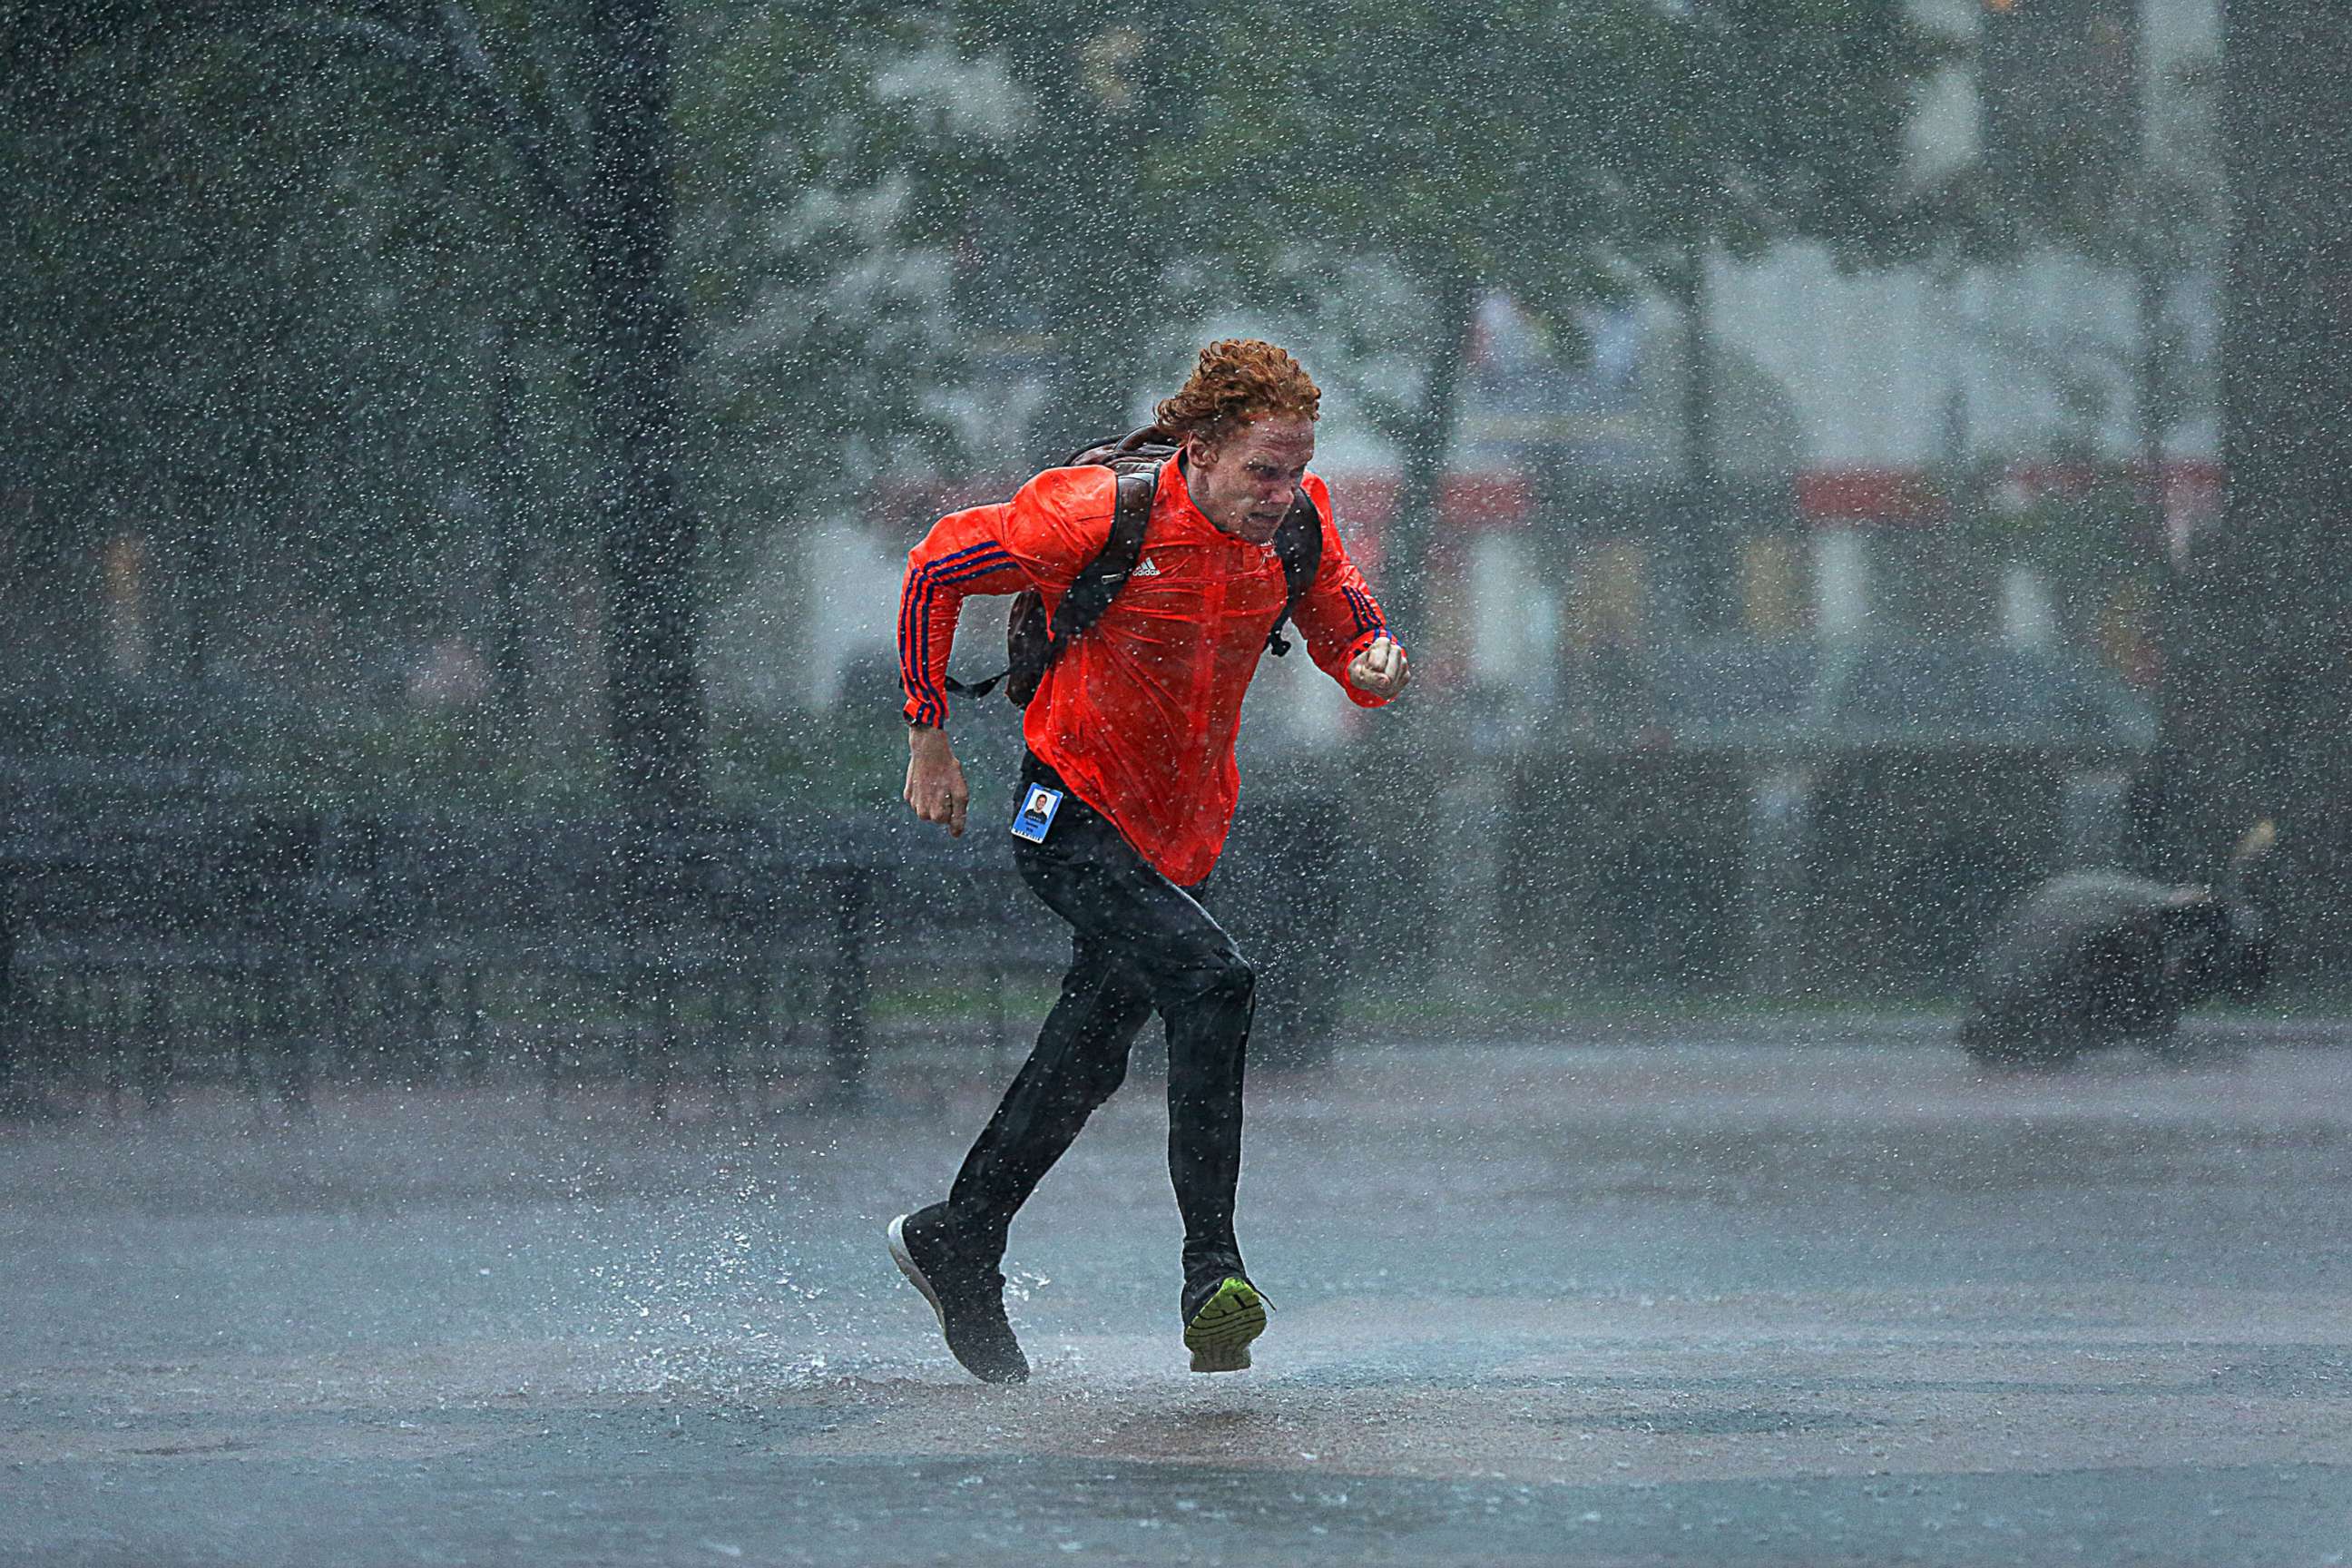 PHOTO: A pedestrian runs through heavy rain in Boston's Copley Square on Sep. 18, 2018.